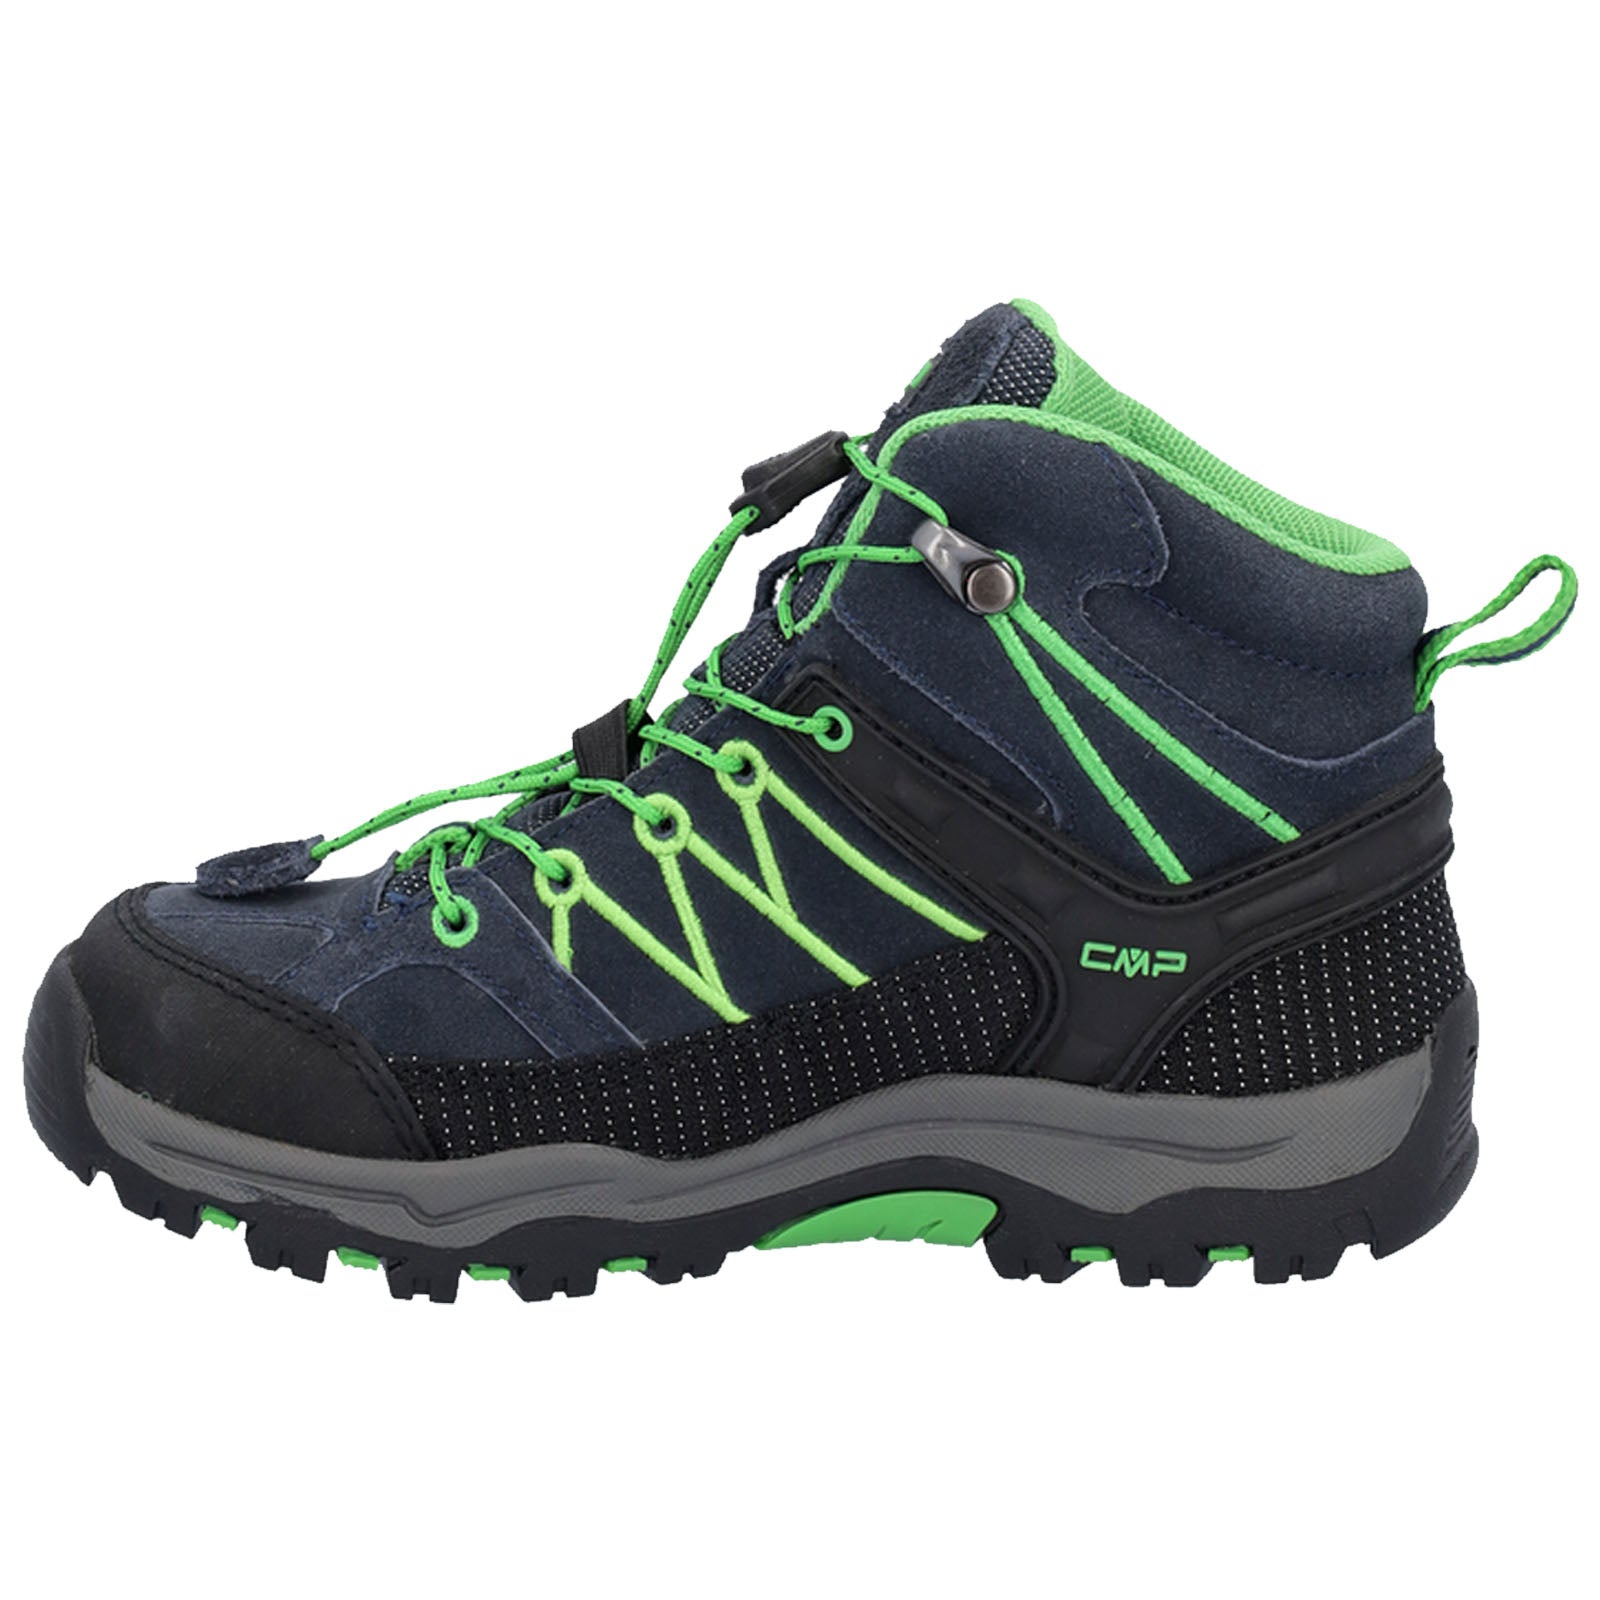 CMP Junior Rigel Waterproof Walking Boots